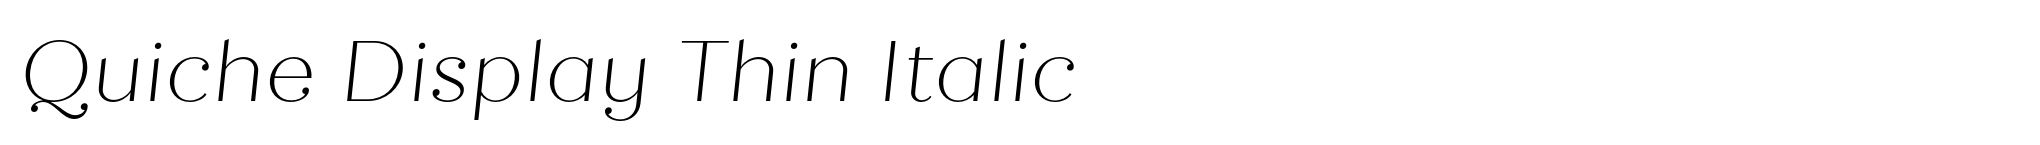 Quiche Display Thin Italic image